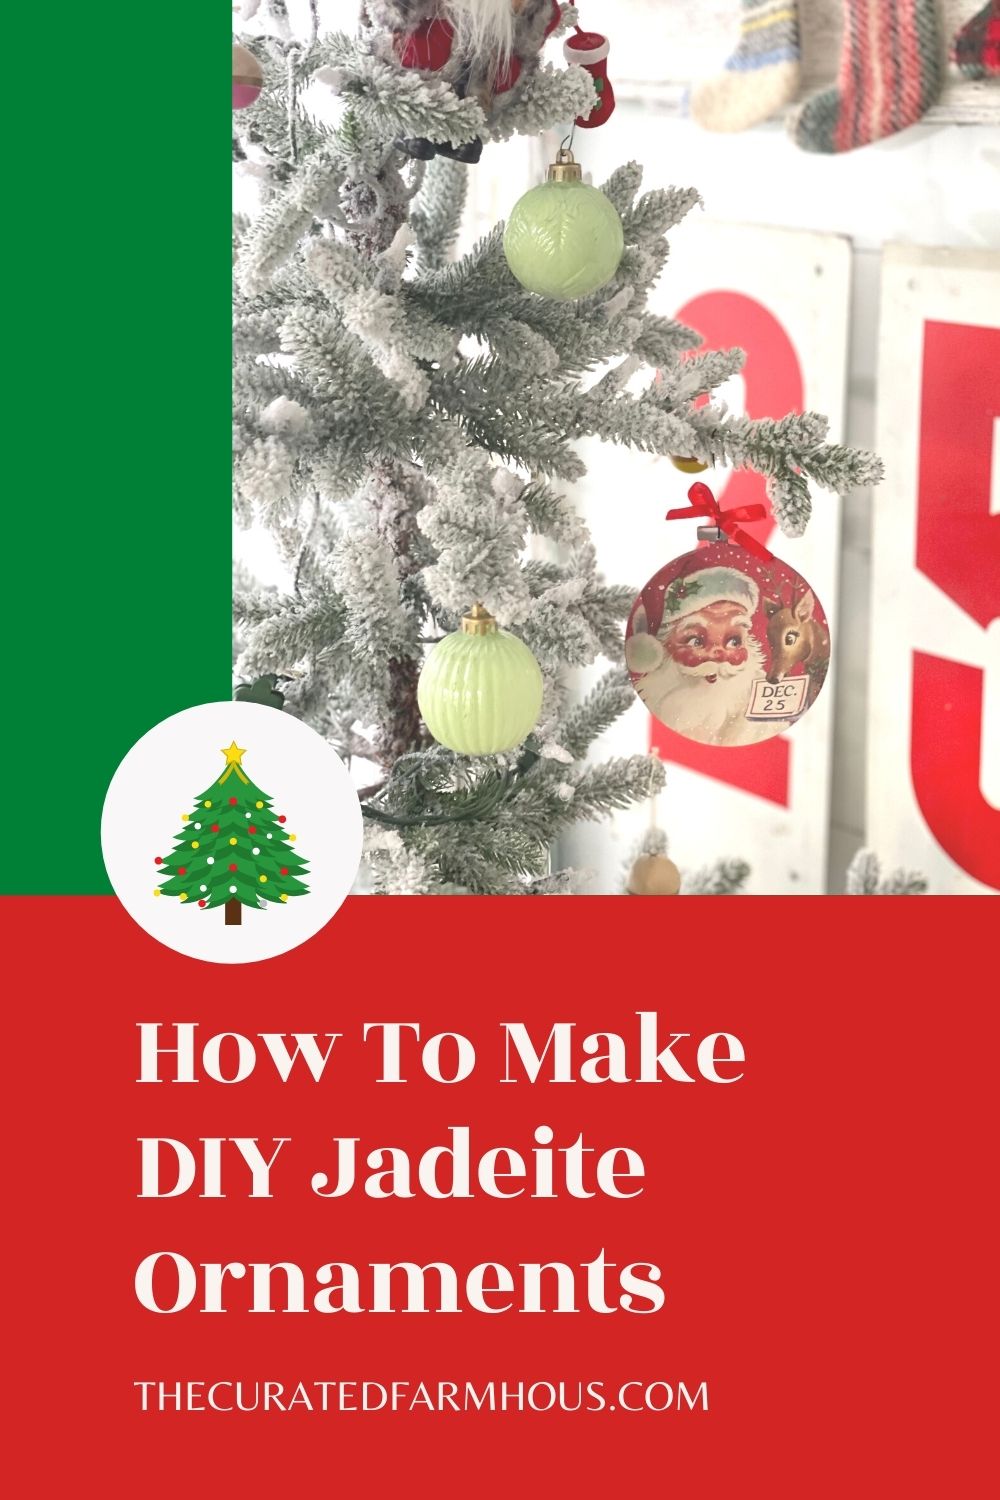 How To Make DIY Jadeite Ornaments